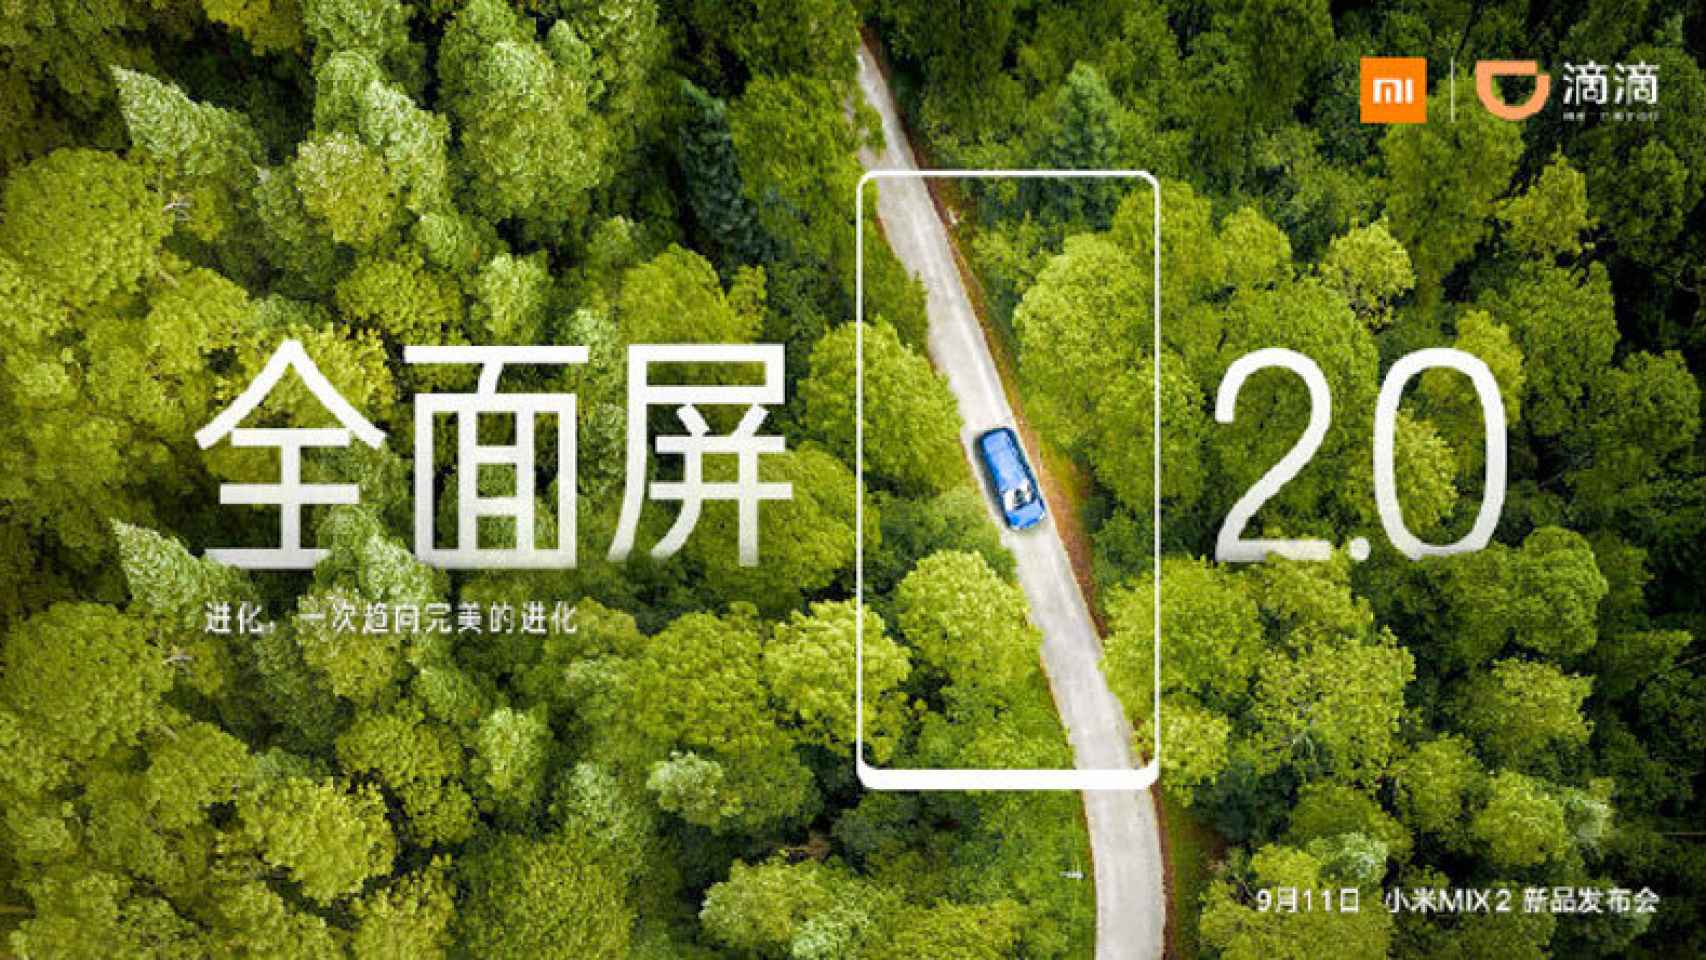 Xiaomi Mi MIX 2, características del móvil Android de referencia